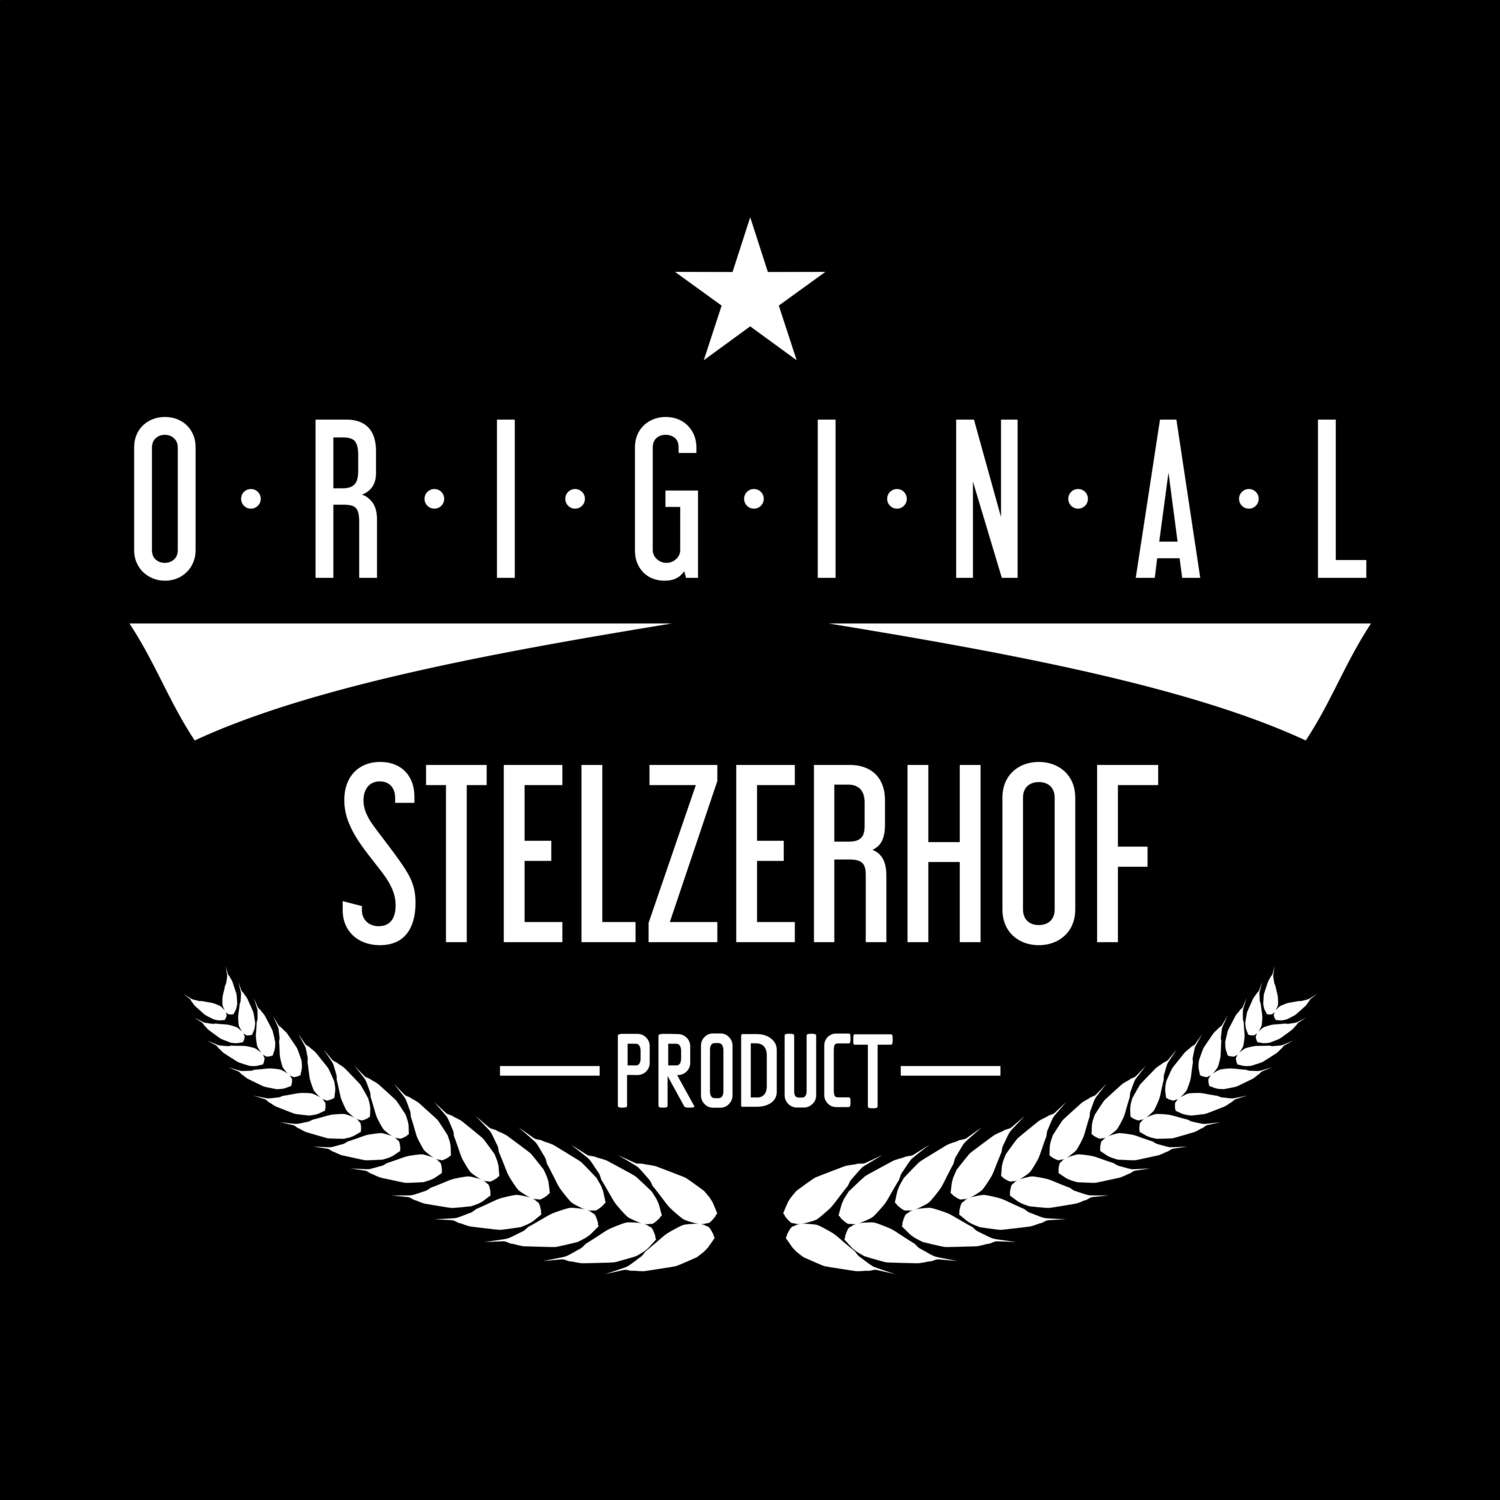 Stelzerhof T-Shirt »Original Product«